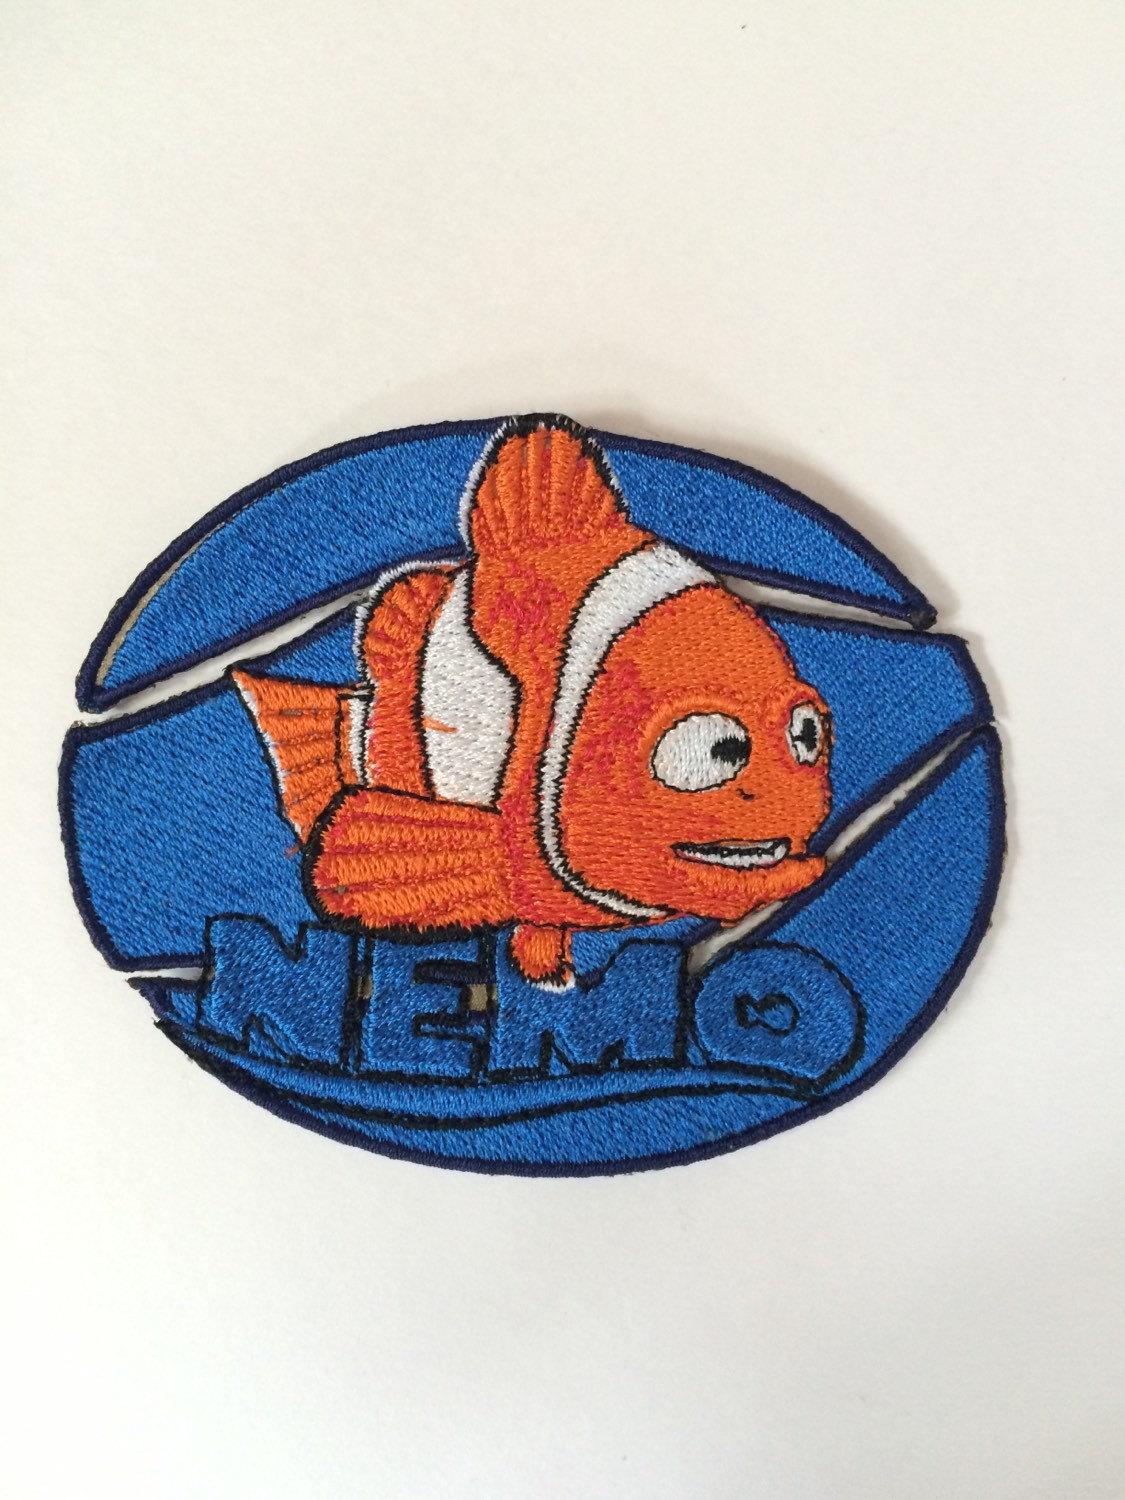 Marlin embroidery design